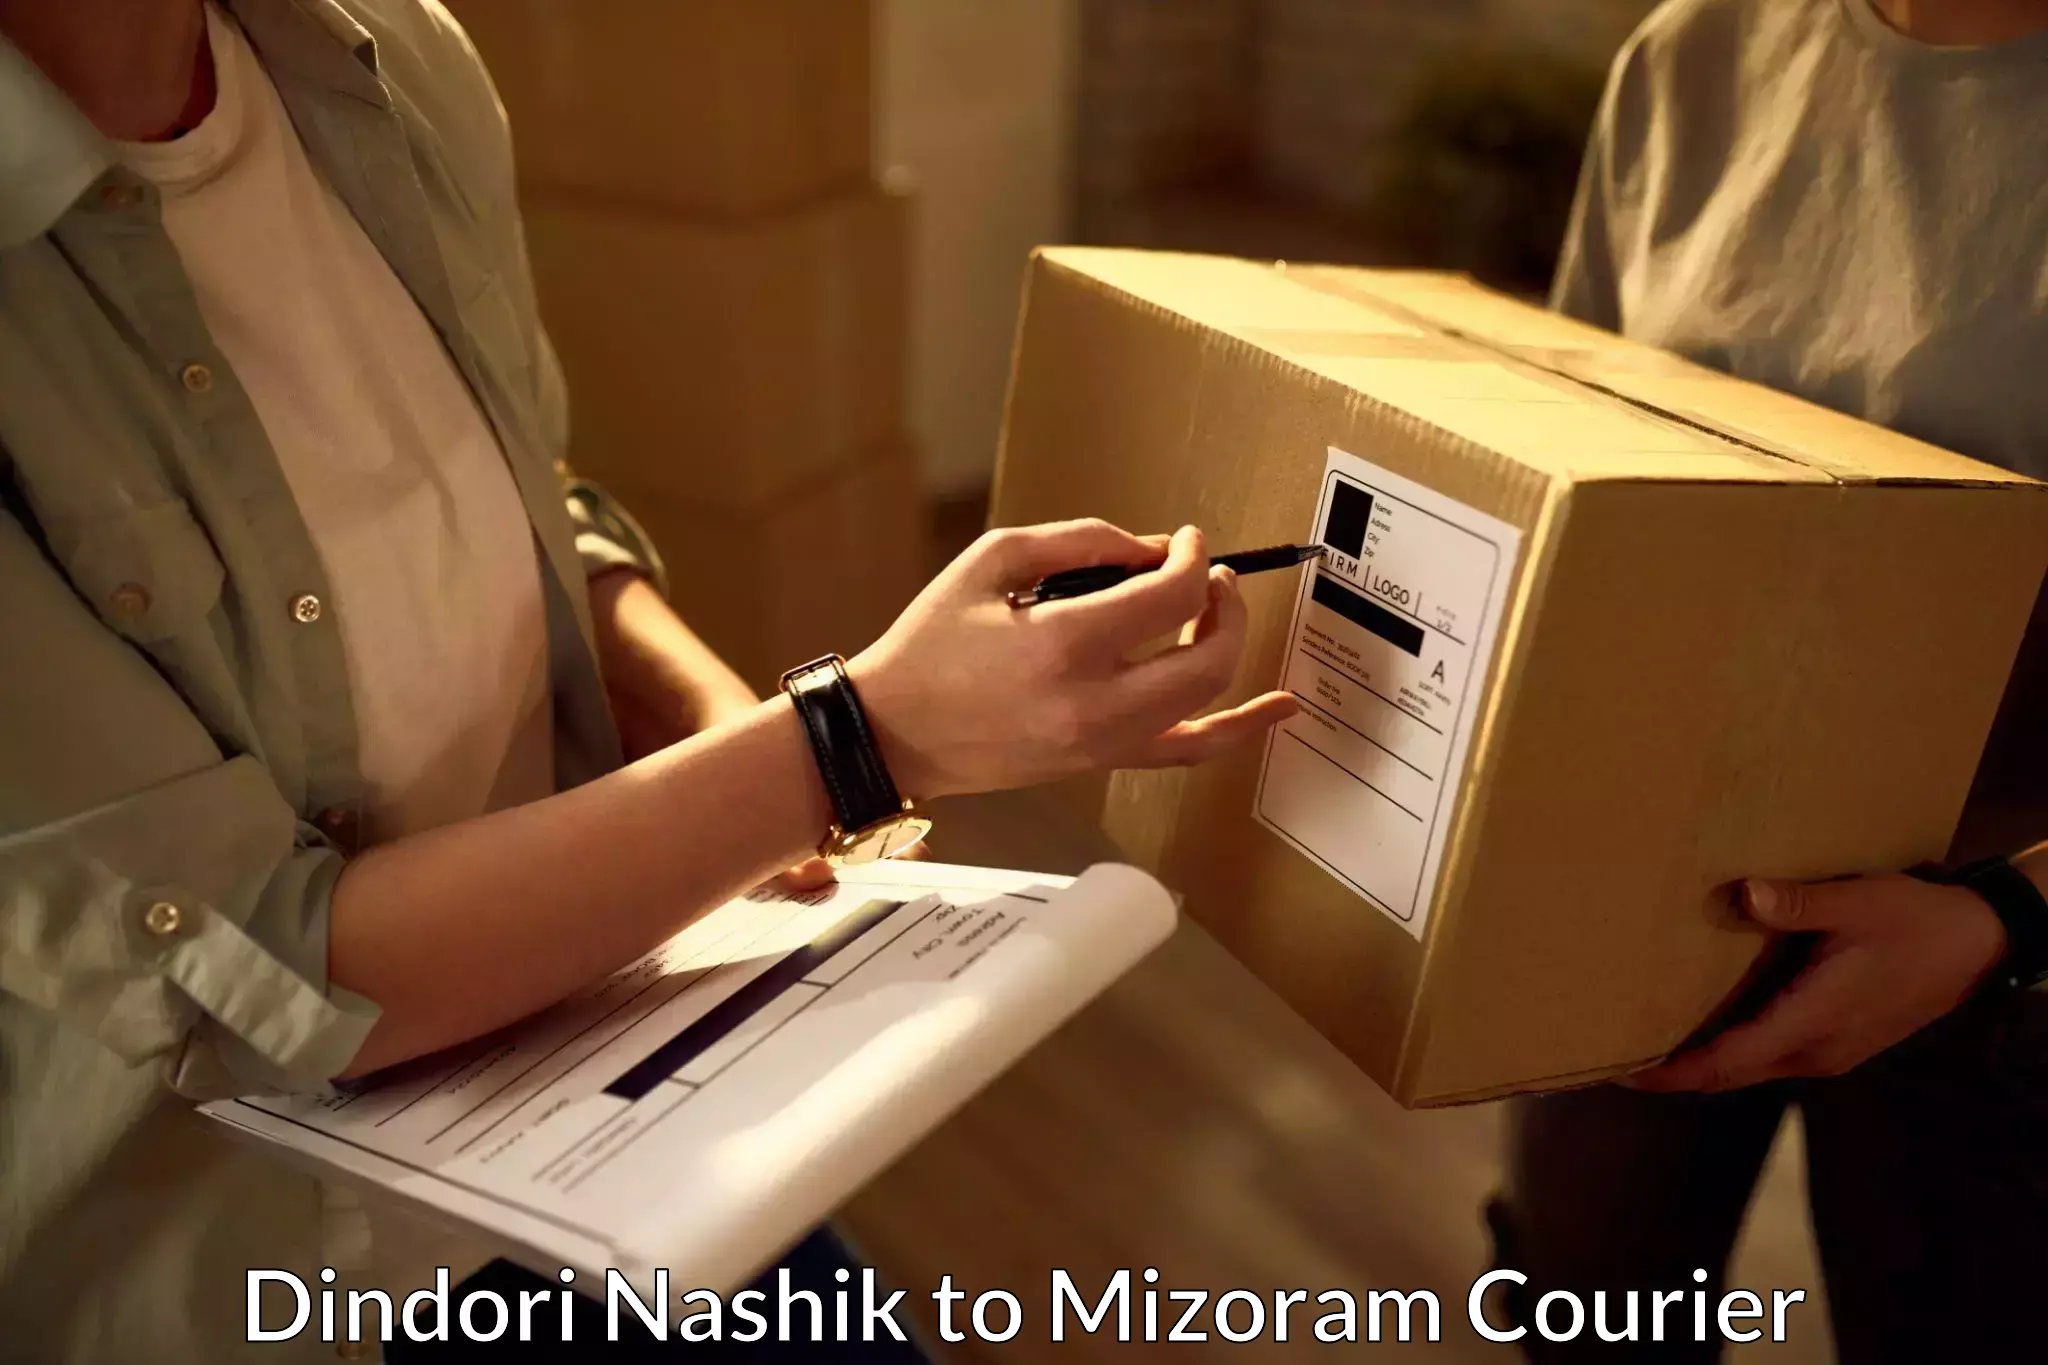 Cash on delivery service Dindori Nashik to Siaha